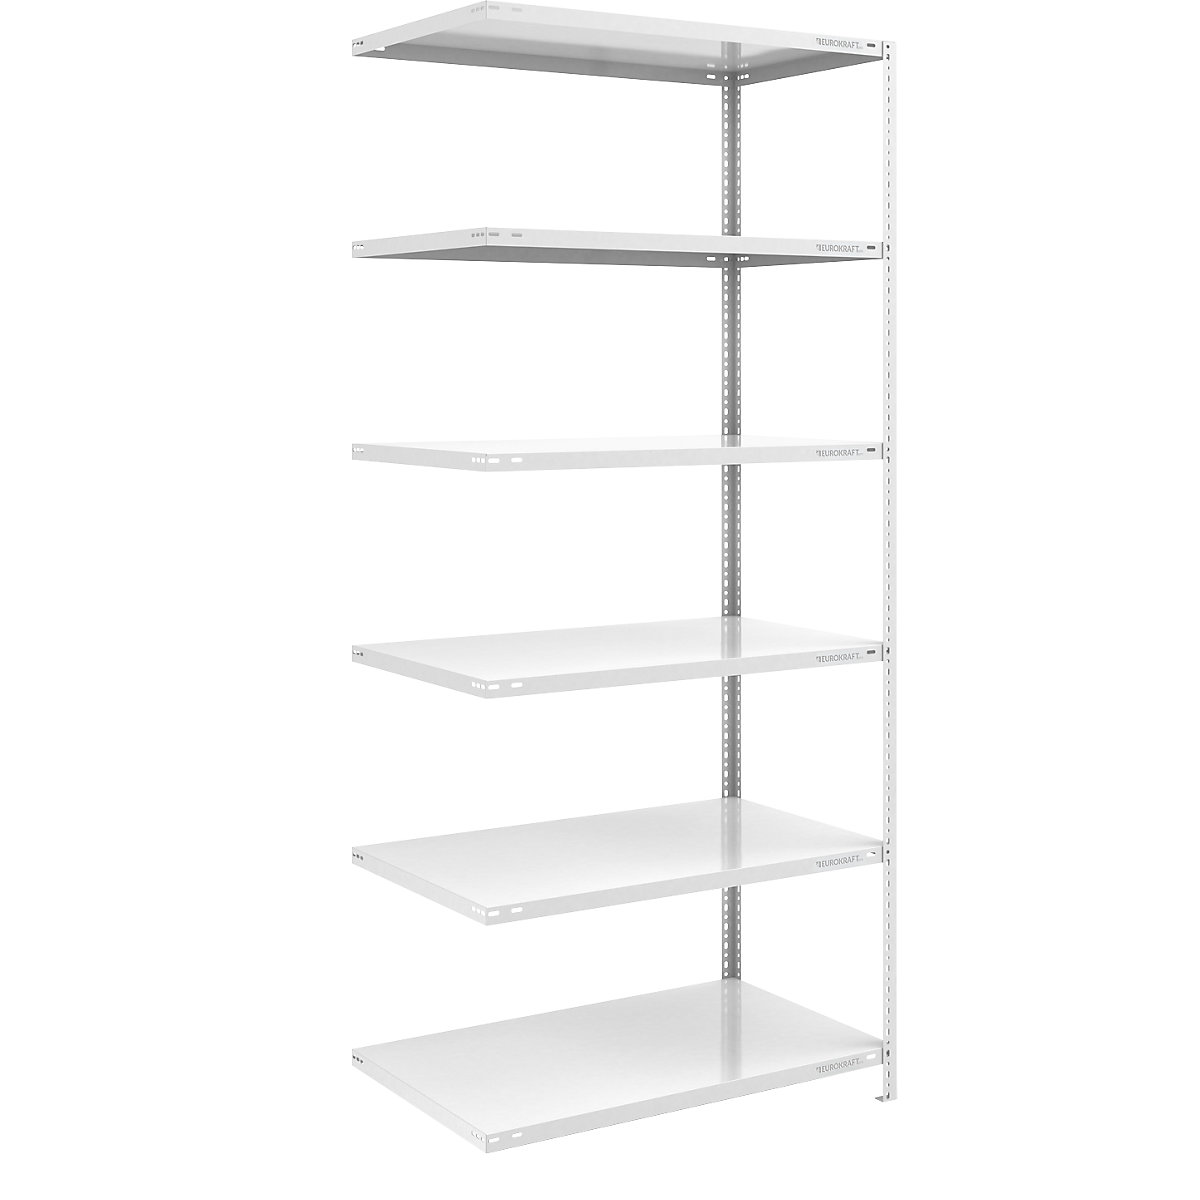 Bolt-together shelf unit, light duty, plastic coated – eurokraft pro, shelf unit height 2500 mm, shelf width 1000 mm, depth 800 mm, extension shelf unit-12